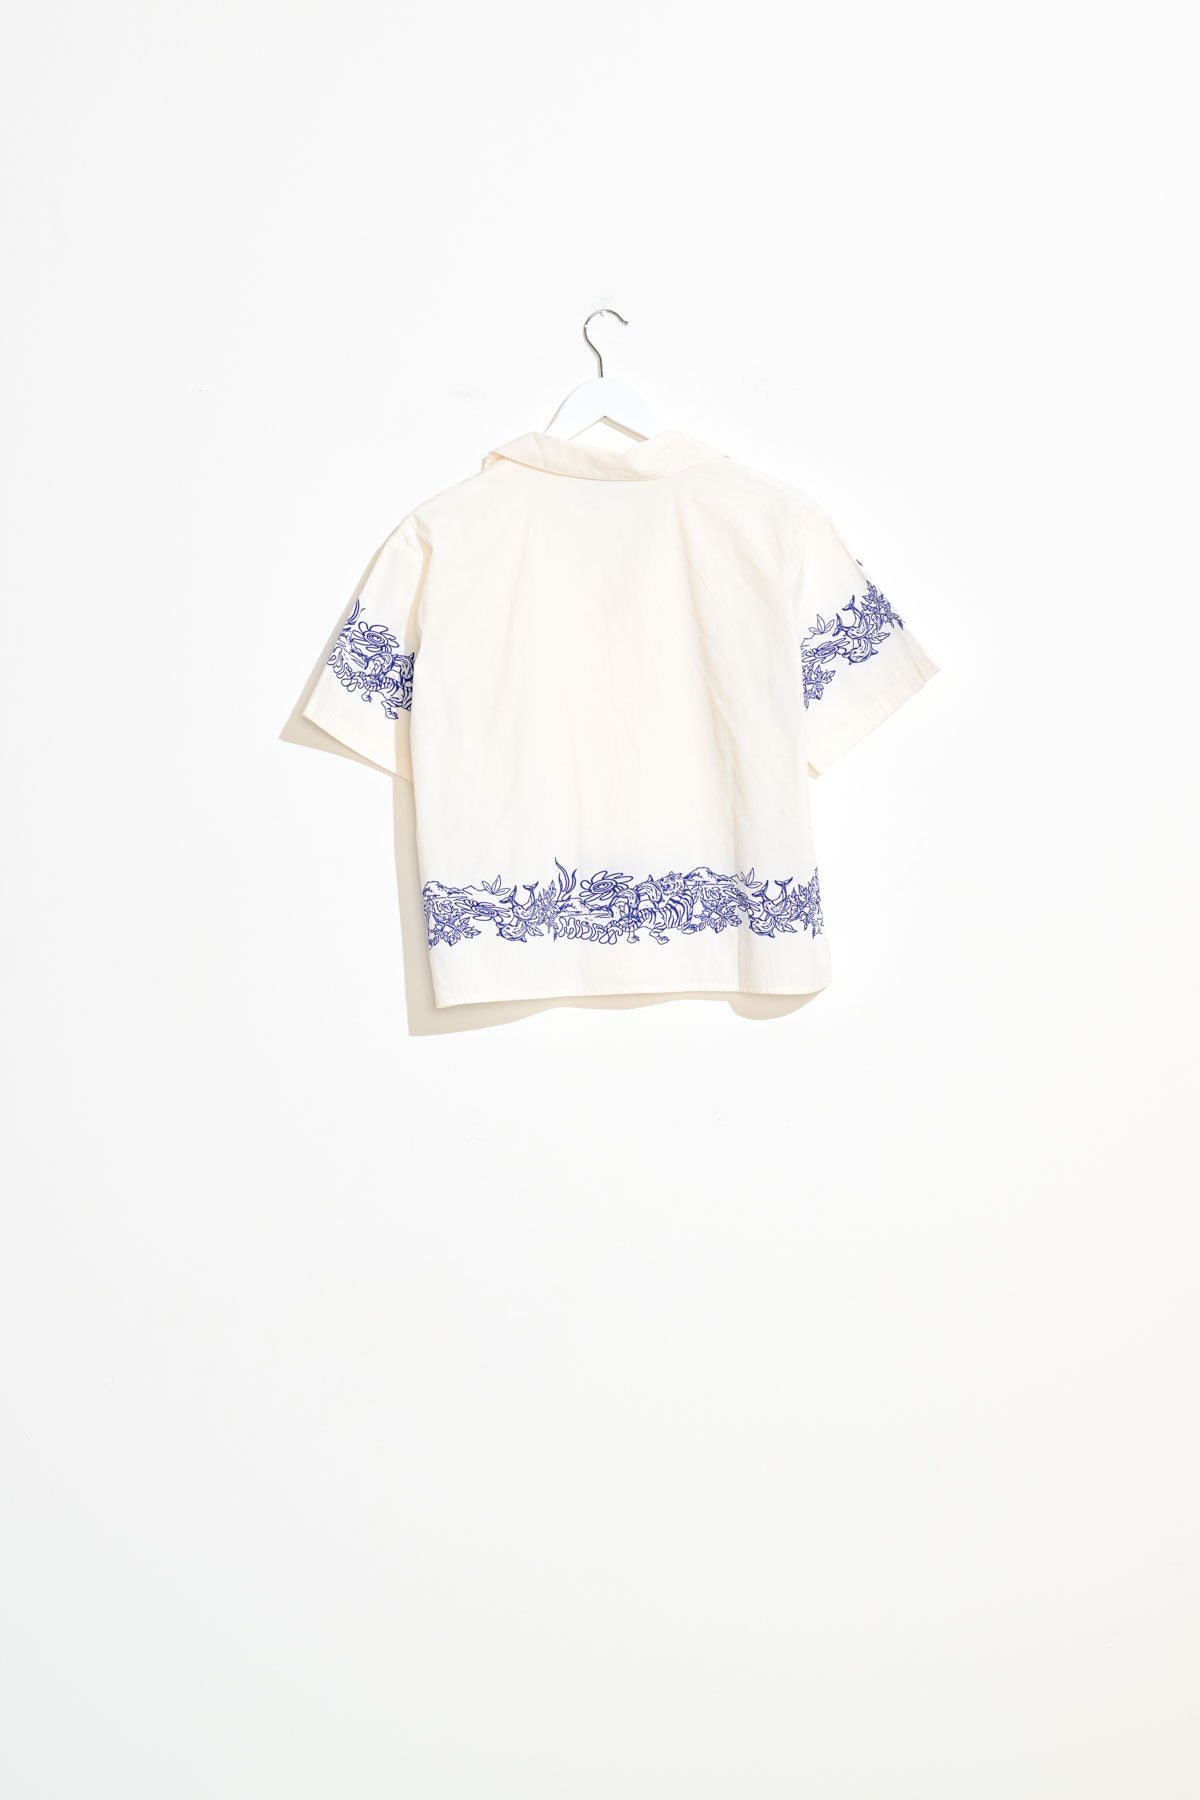 Misfit Shapes - Precious Cosmo Shirt - White